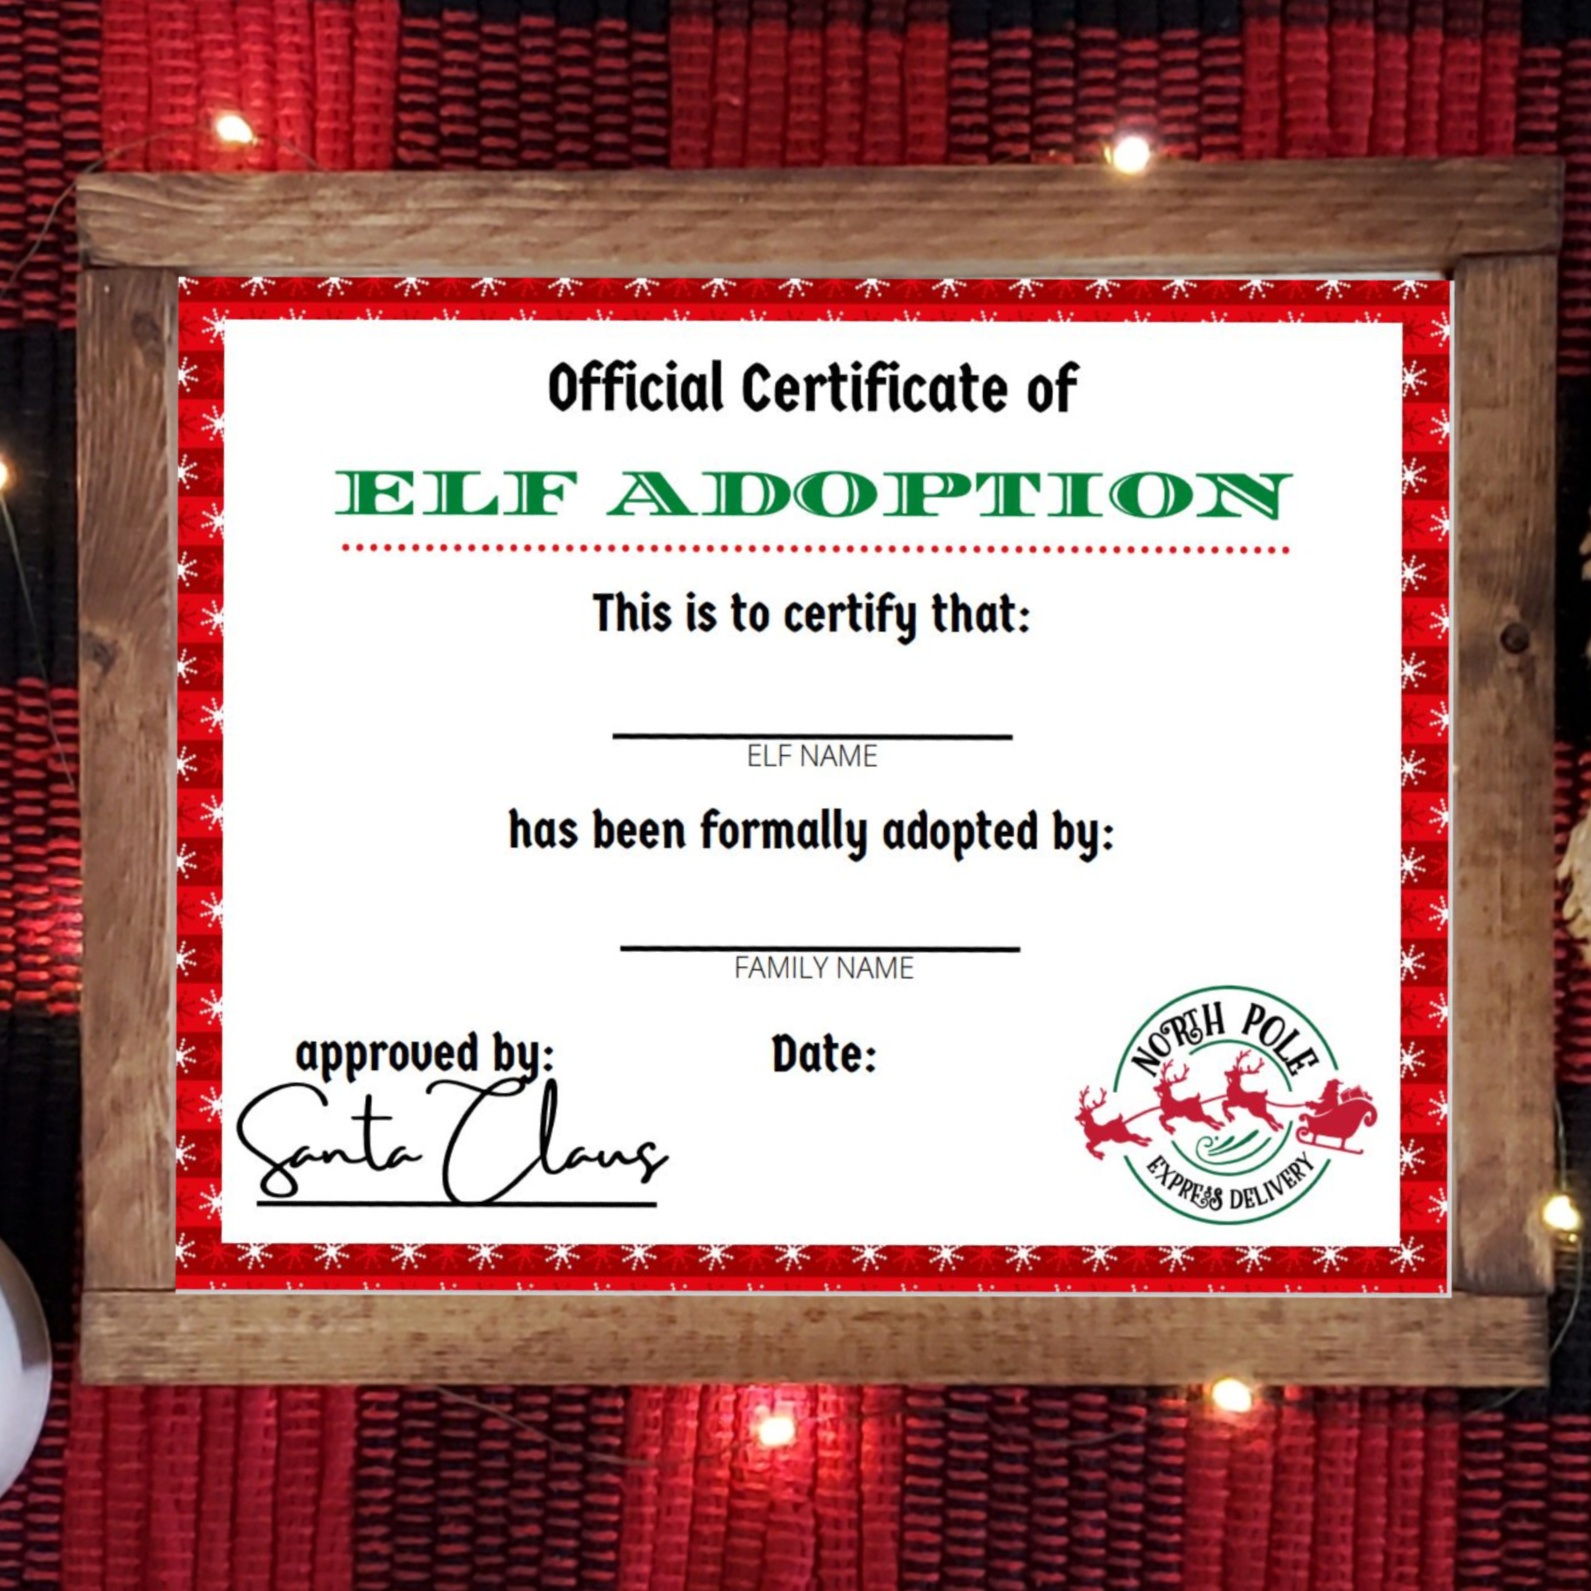 Free Printable Elf Adoption Certificate